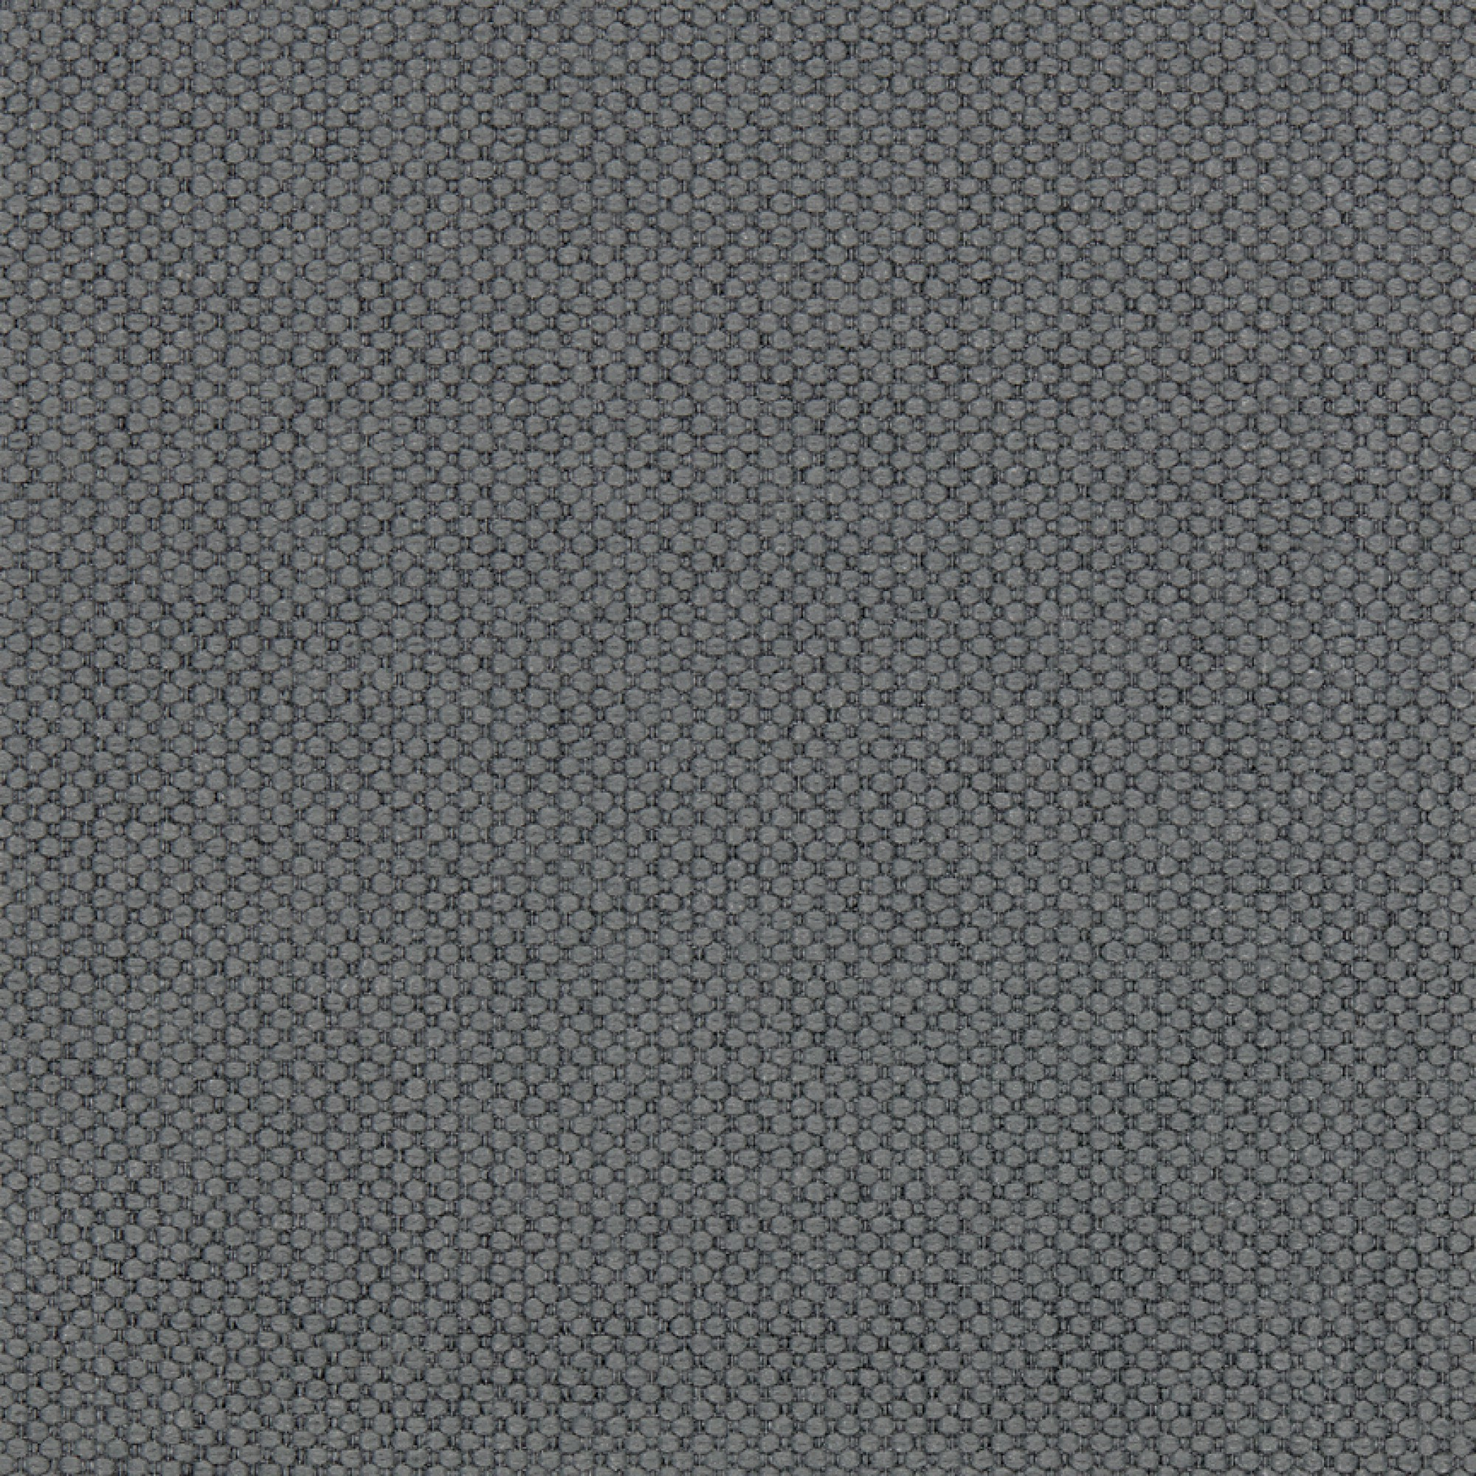 Fabric sample Merit 0003 grey